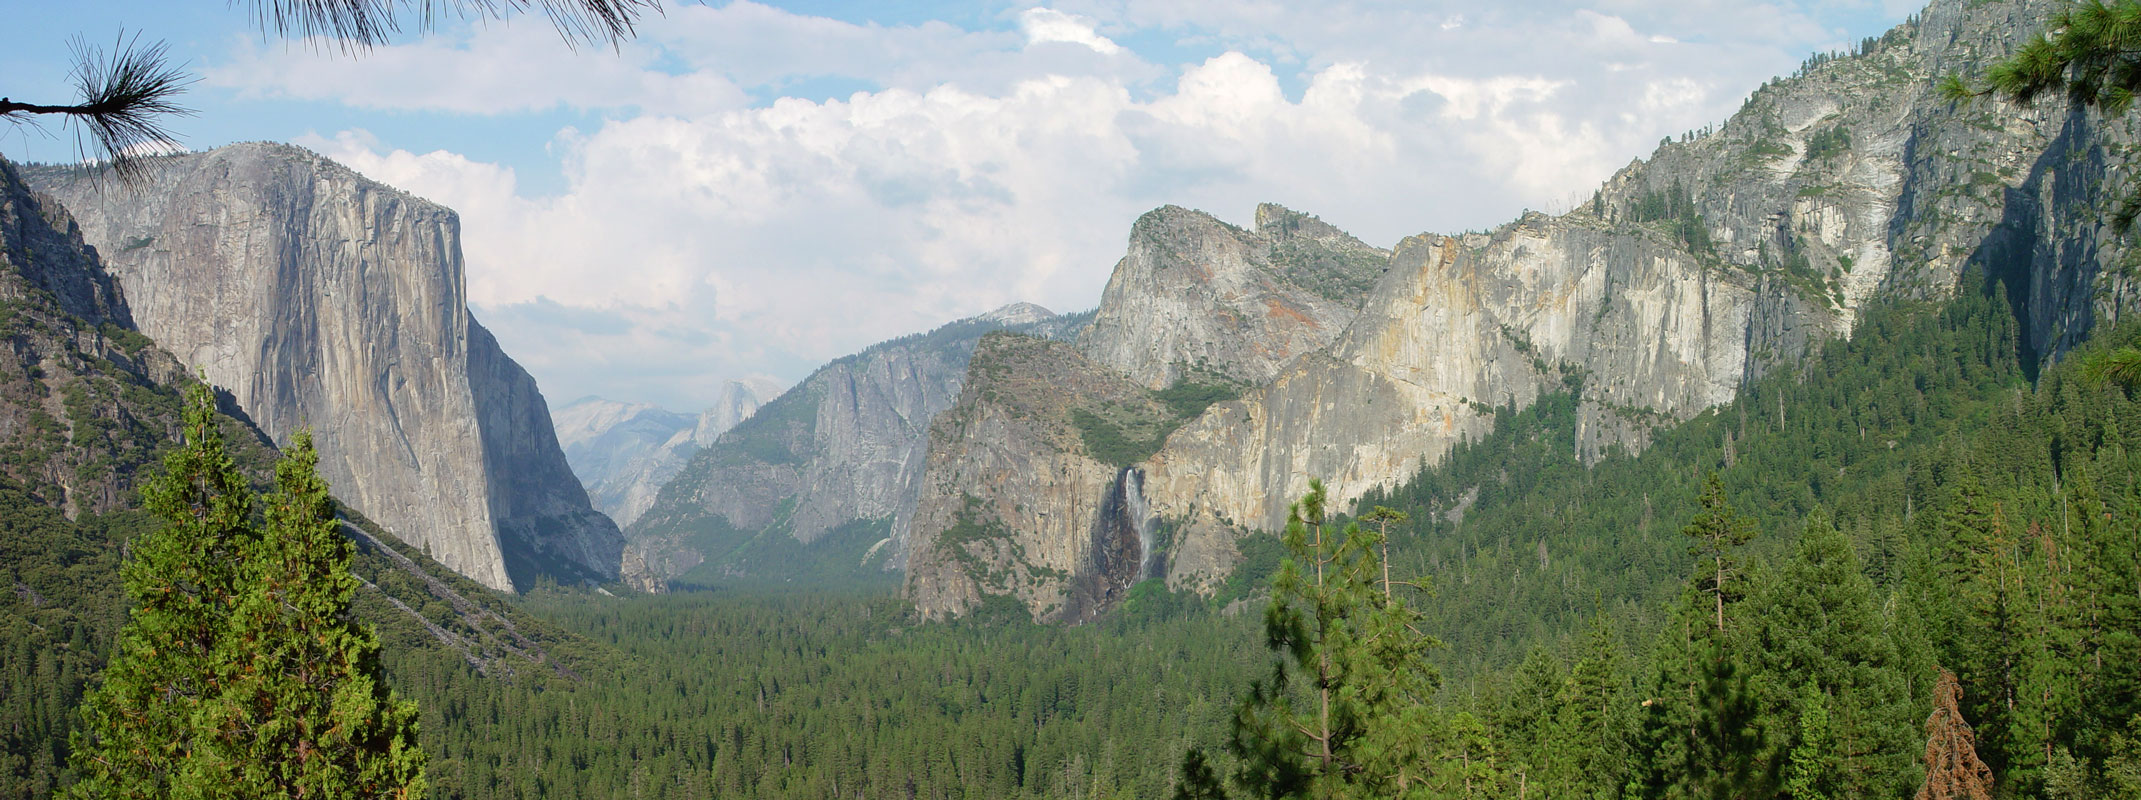 Yosemite, California from Valley View